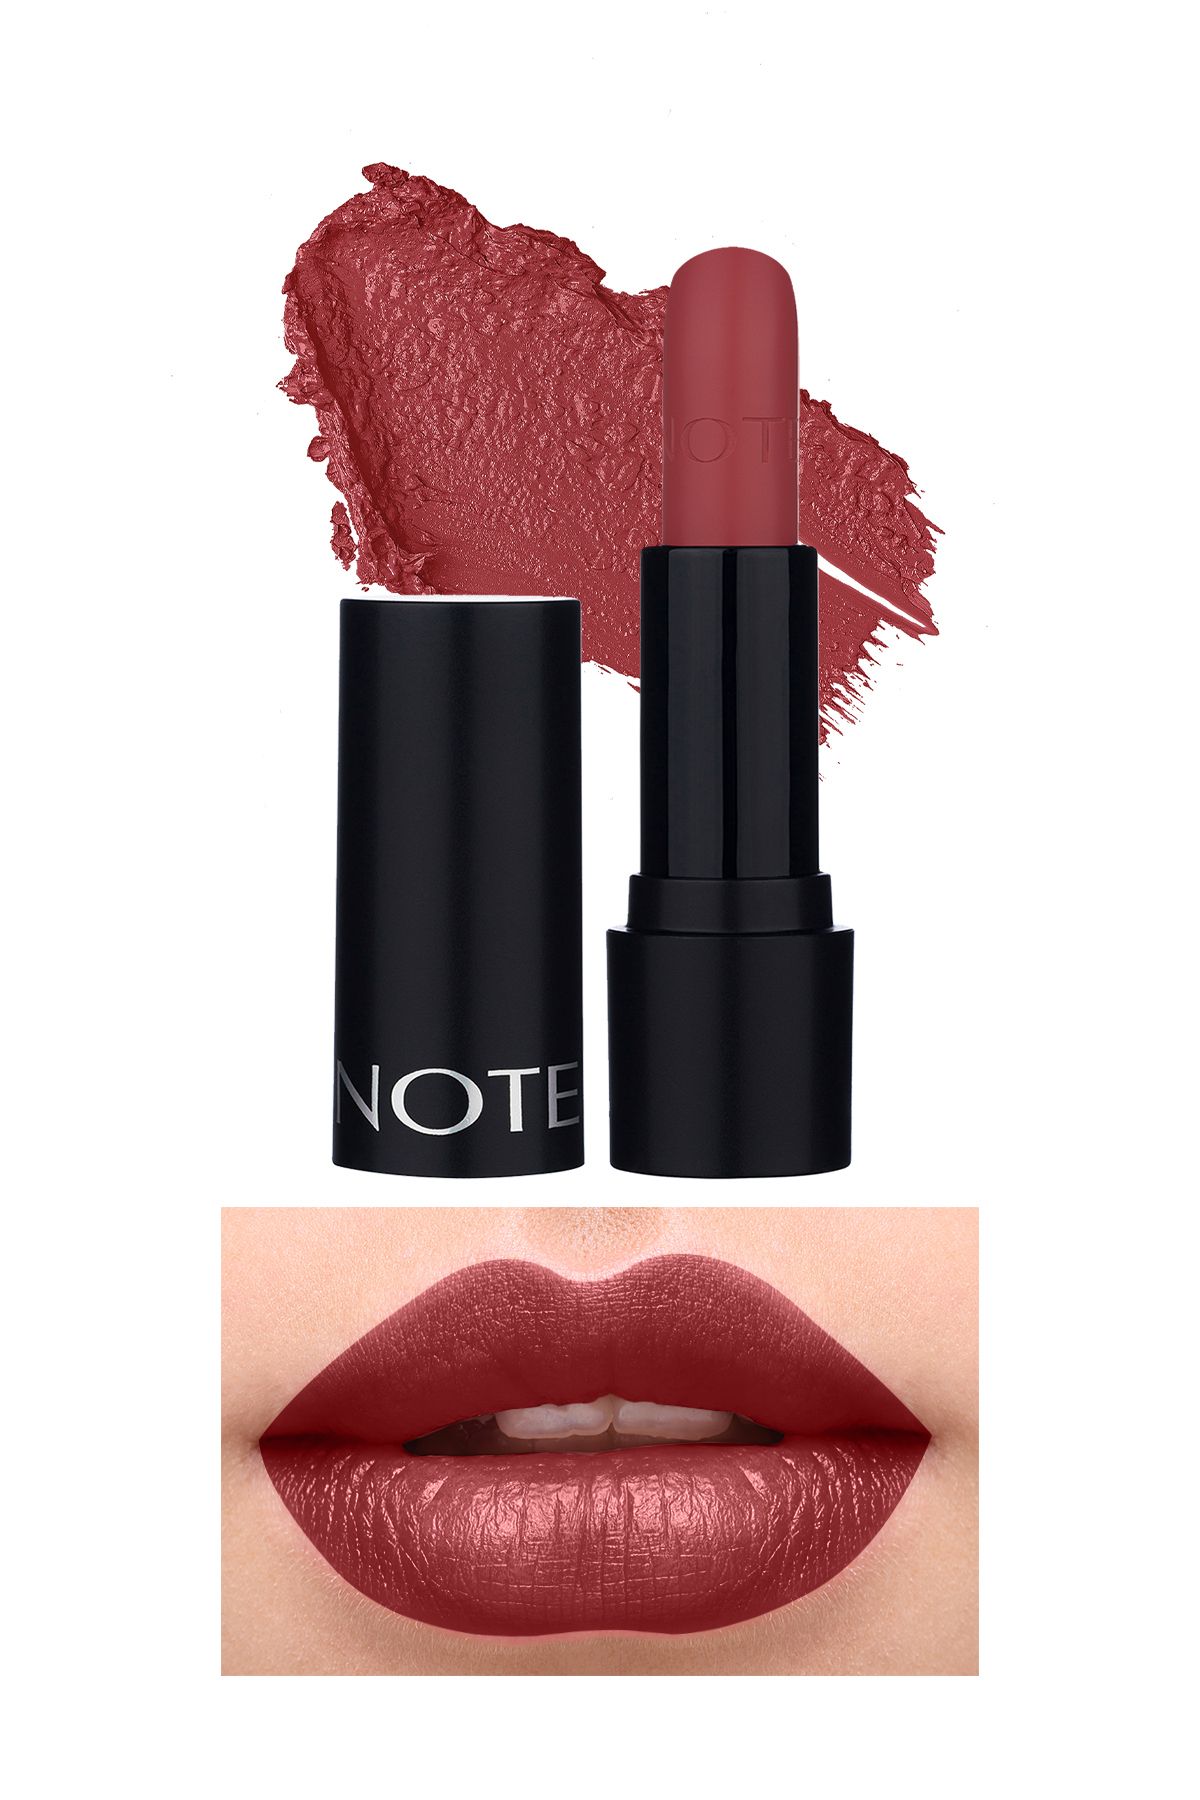 Note Cosmetics Deep Impact Lipstick Kremsi Dokulu Yarı Parlak Ruj 04 Terracotta - Kırmızı